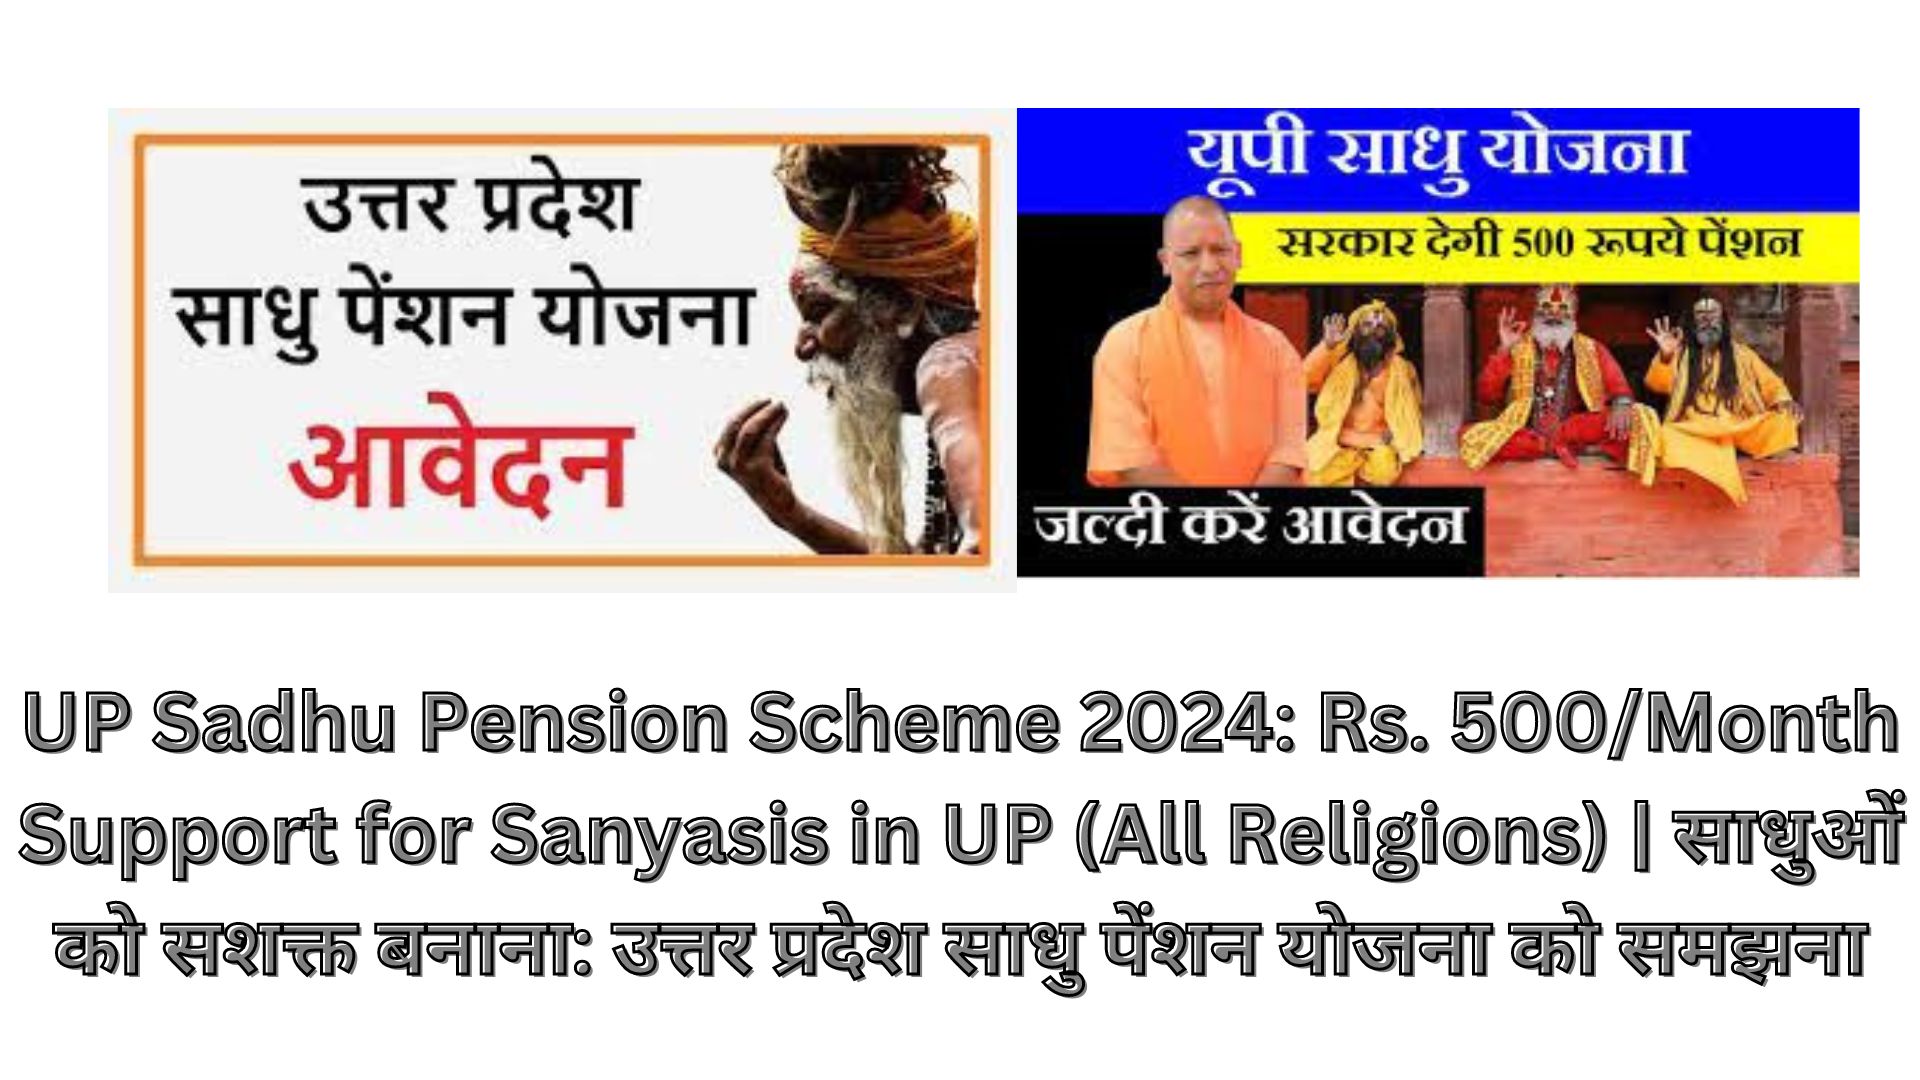 UP Sadhu Pension Scheme 2024: Rs. 500/Month Support for Sanyasis in UP (All Religions) | साधुओं को सशक्त बनाना: उत्तर प्रदेश साधु पेंशन योजना को समझना